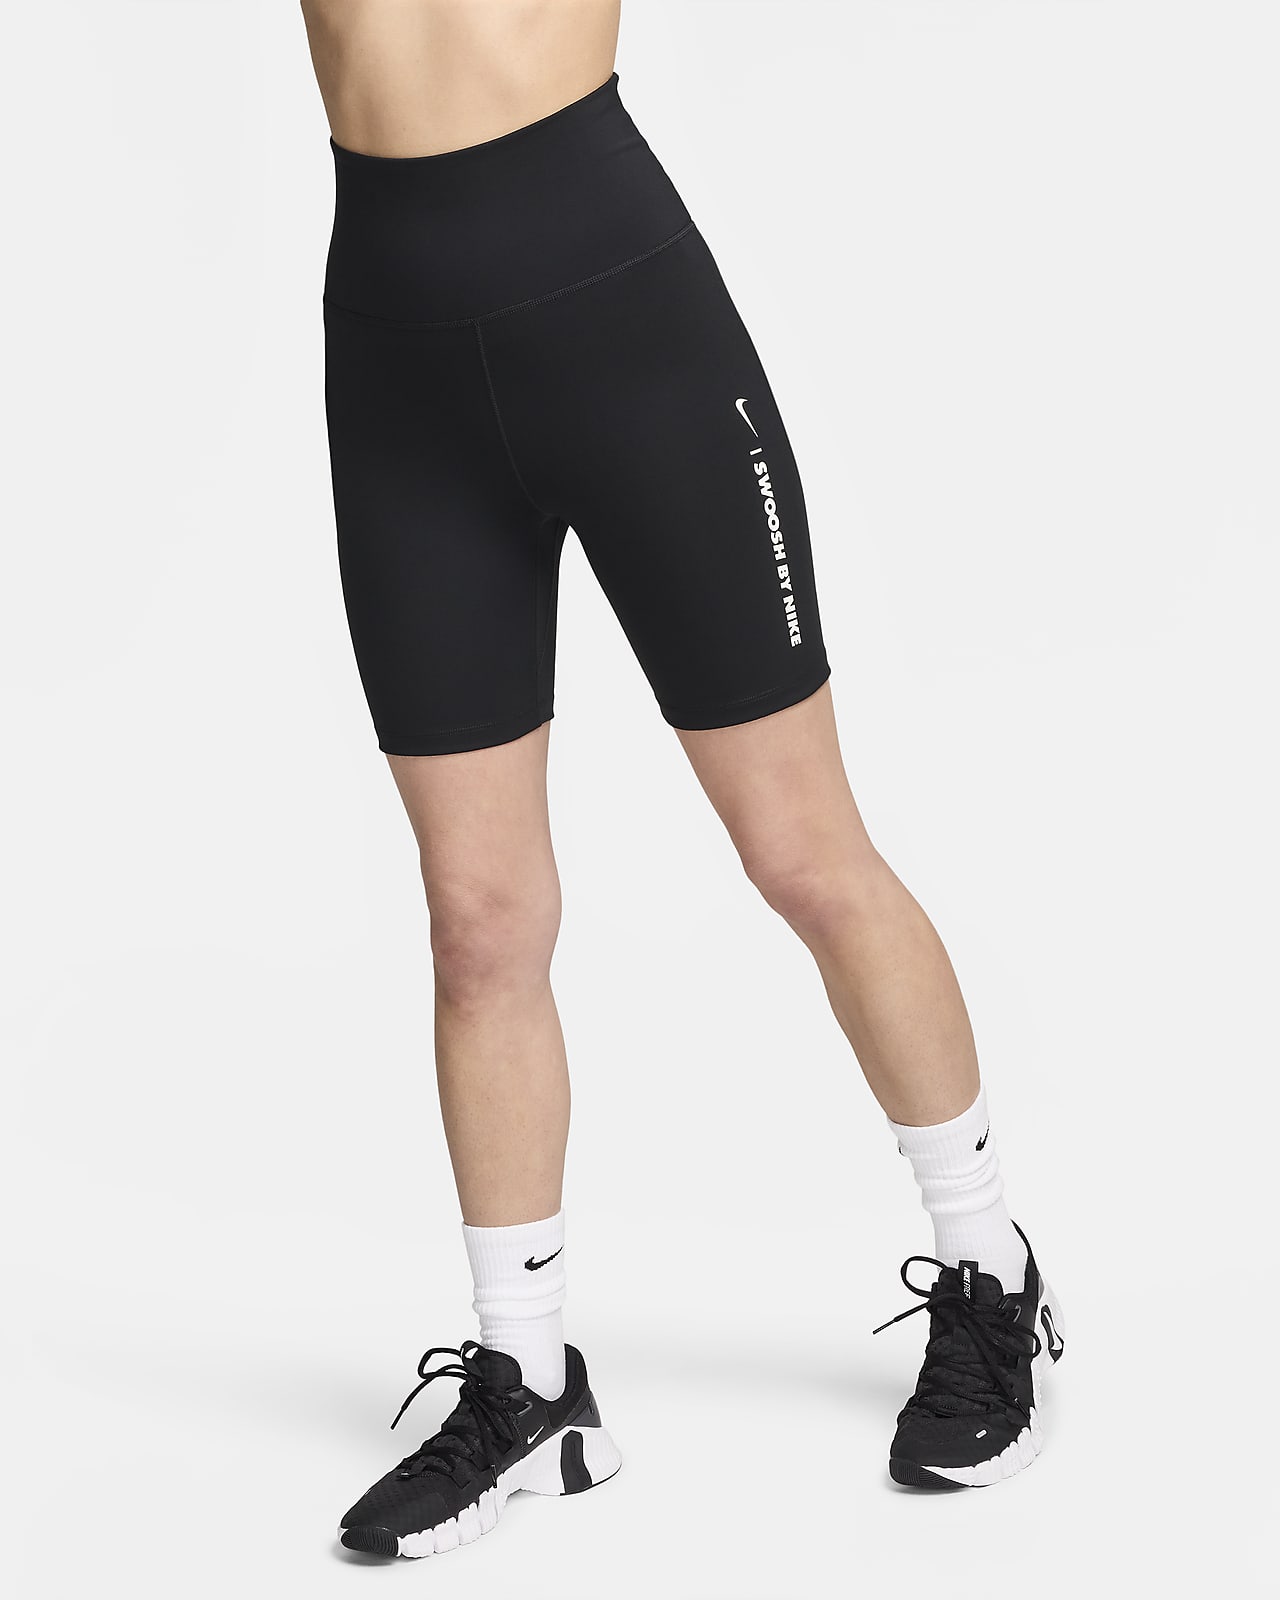 Nike One magas derekú, 18 cm-es női kerékpáros rövidnadrág